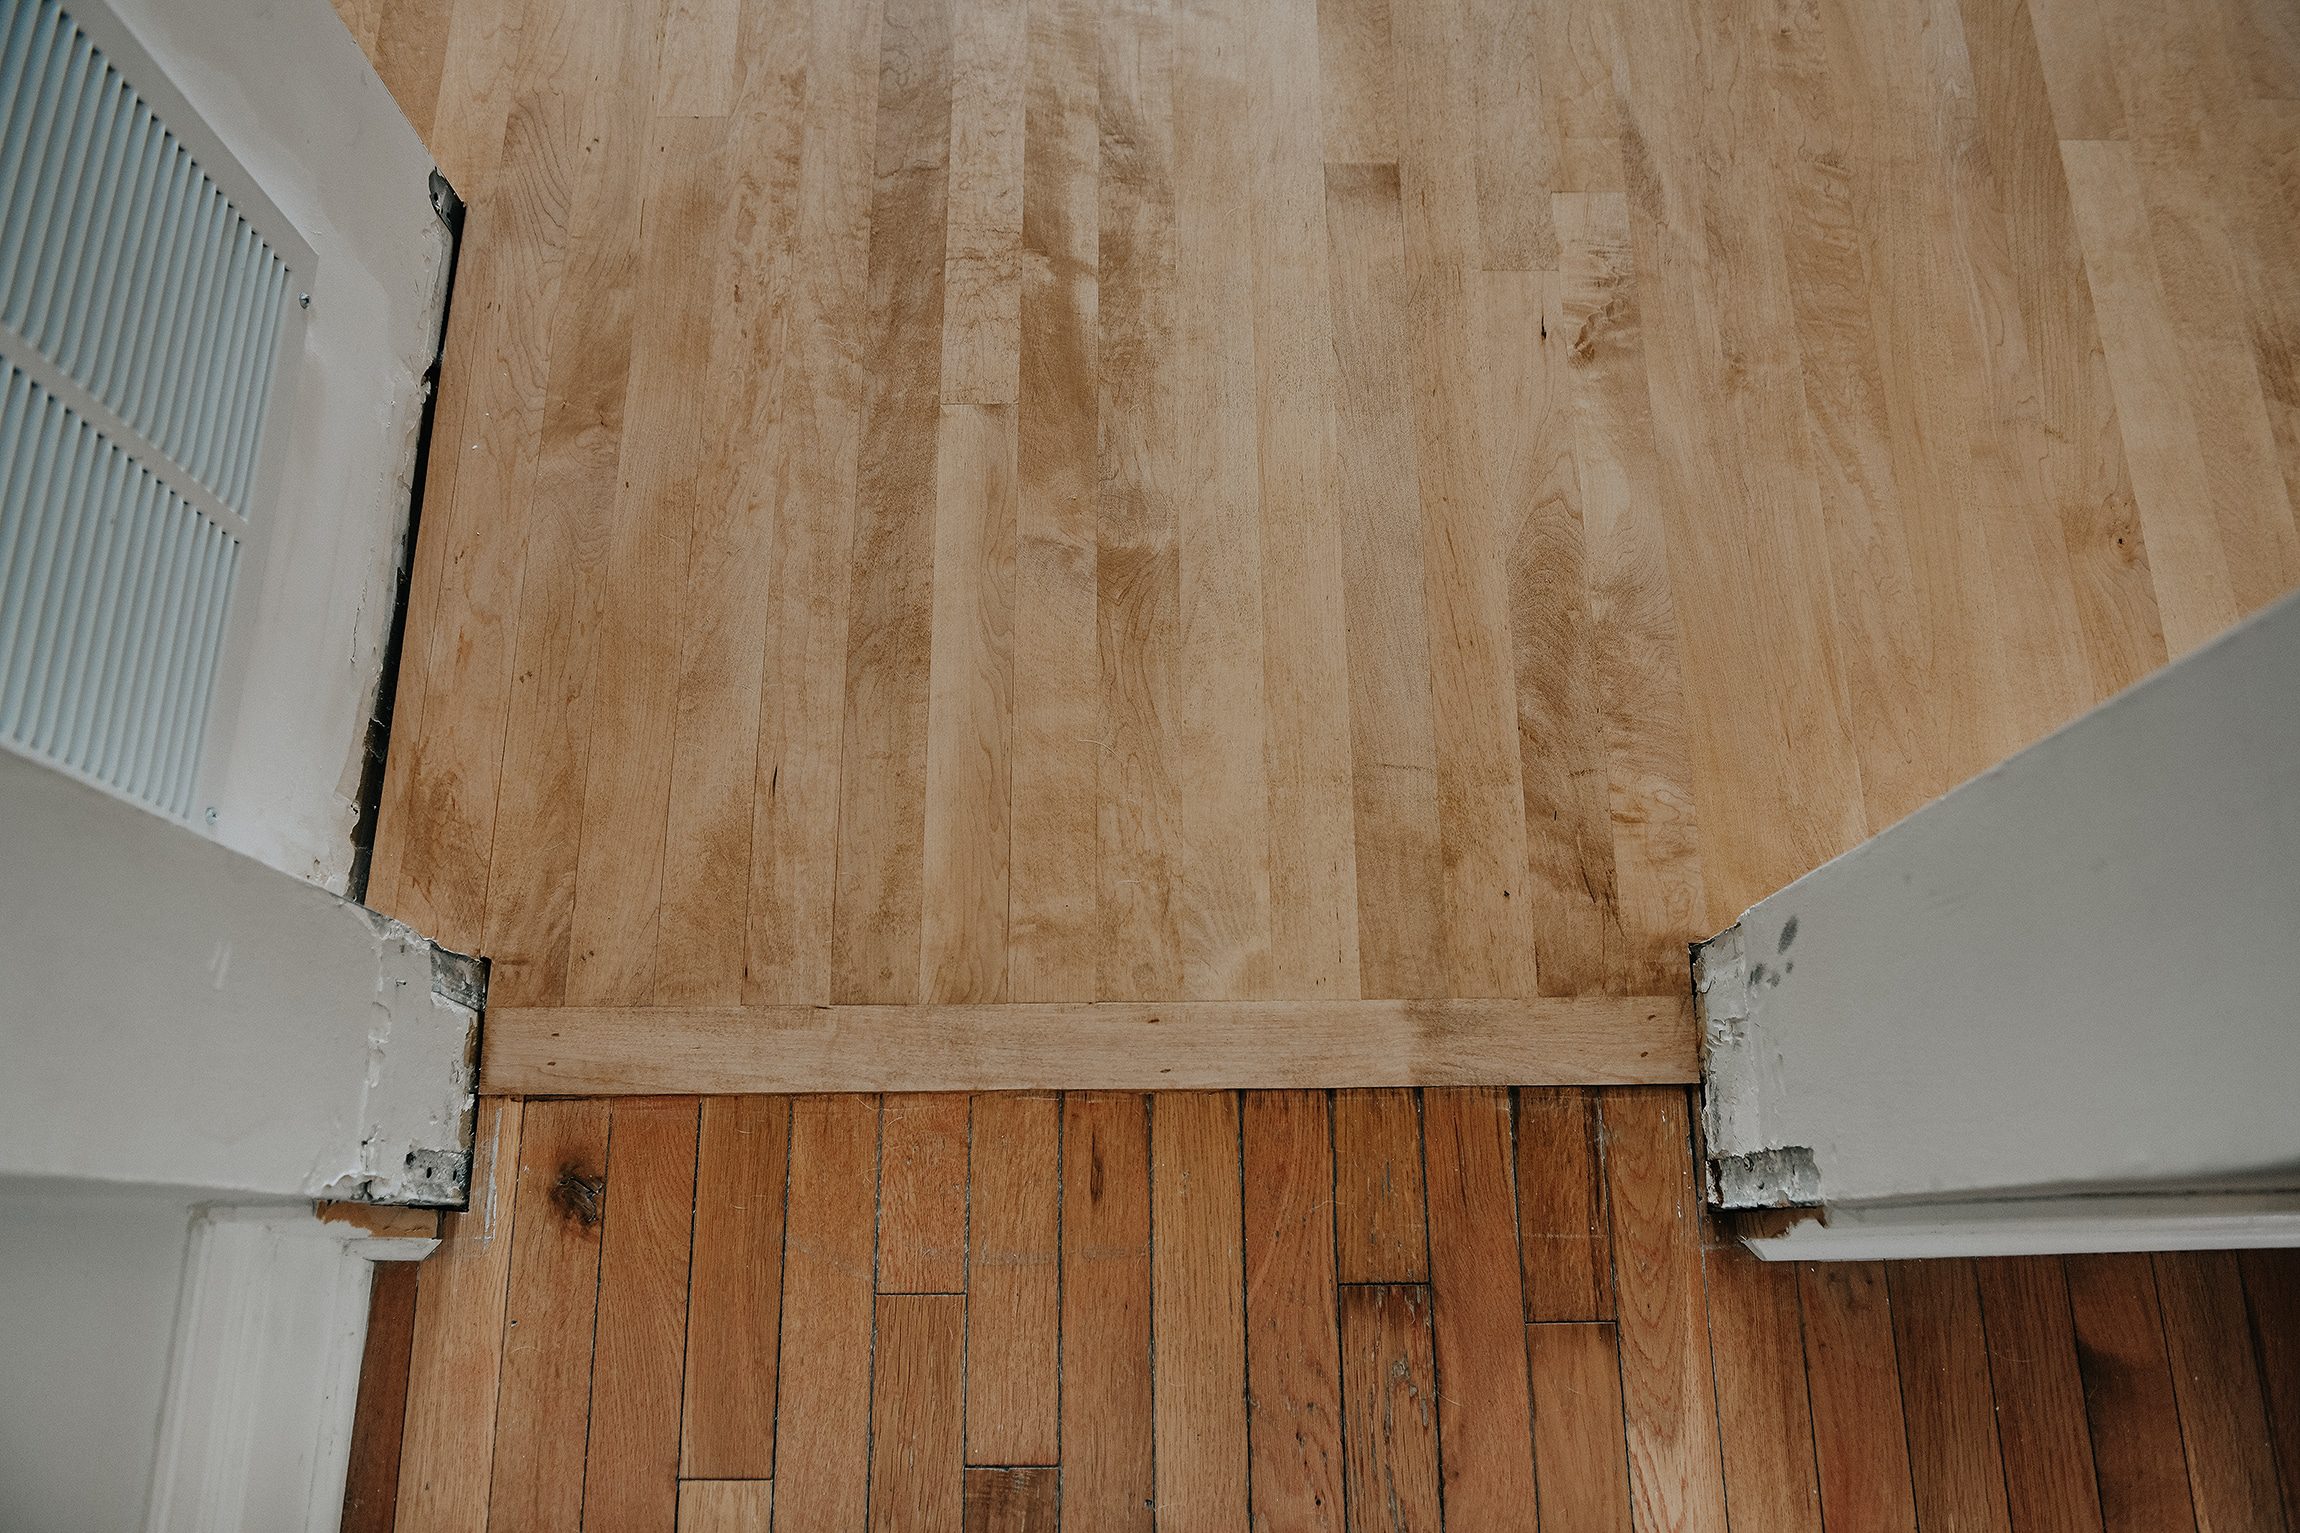 Maple flooring transition between rooms | via Yellow Brick Home